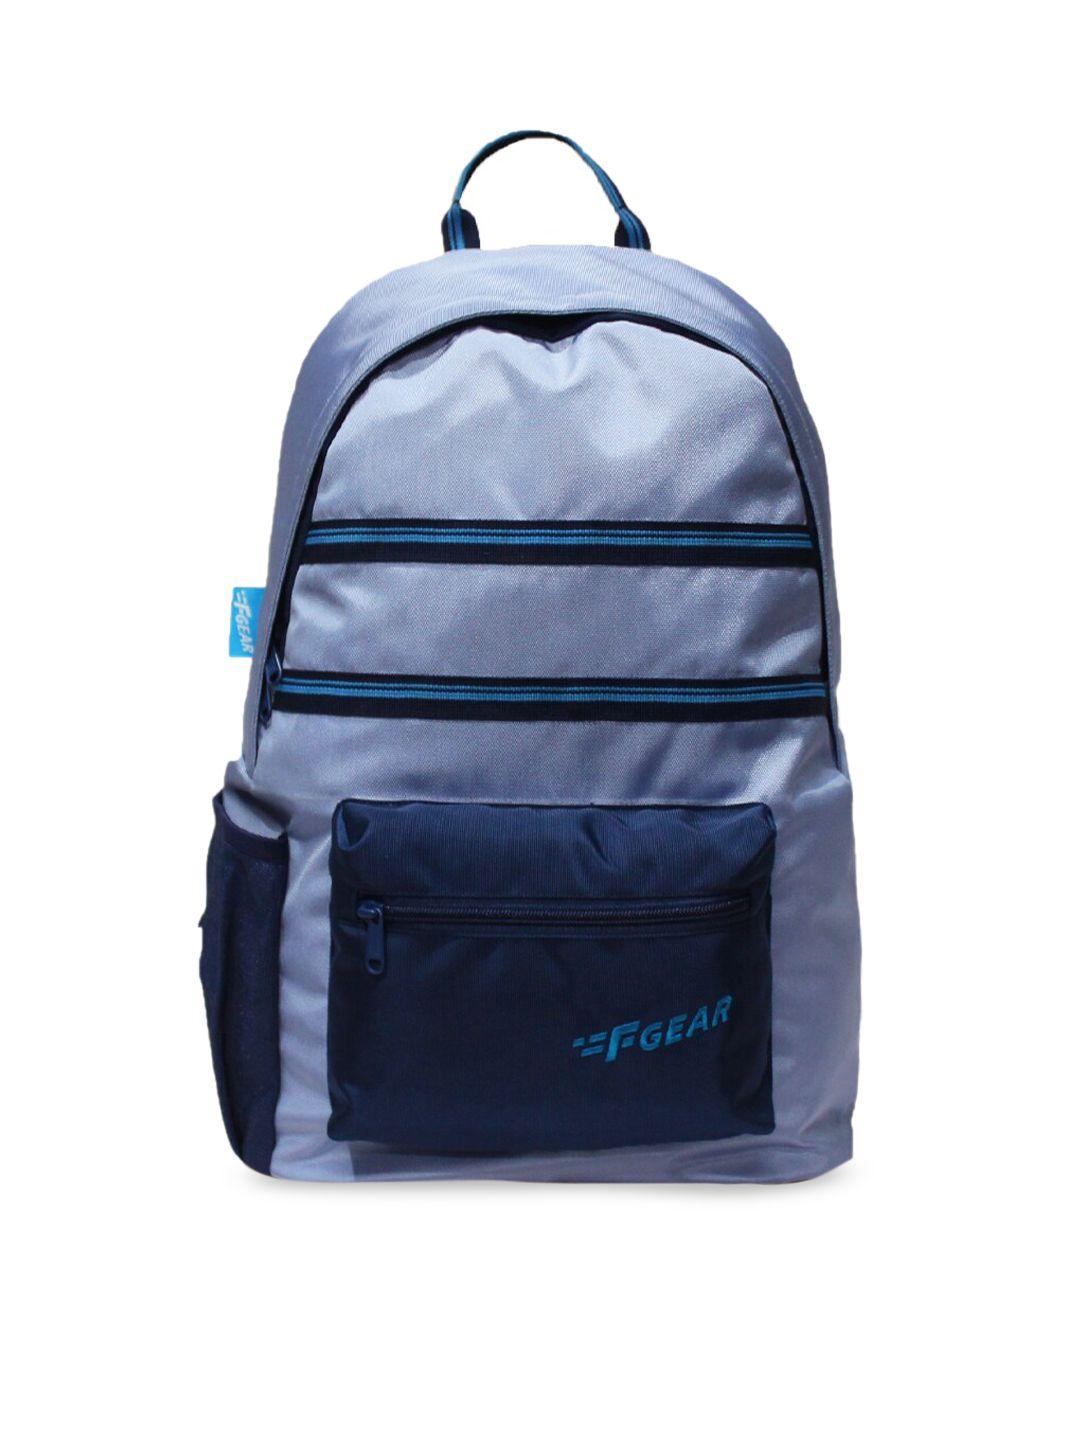 f gear unisex lavender & blue solid backpack